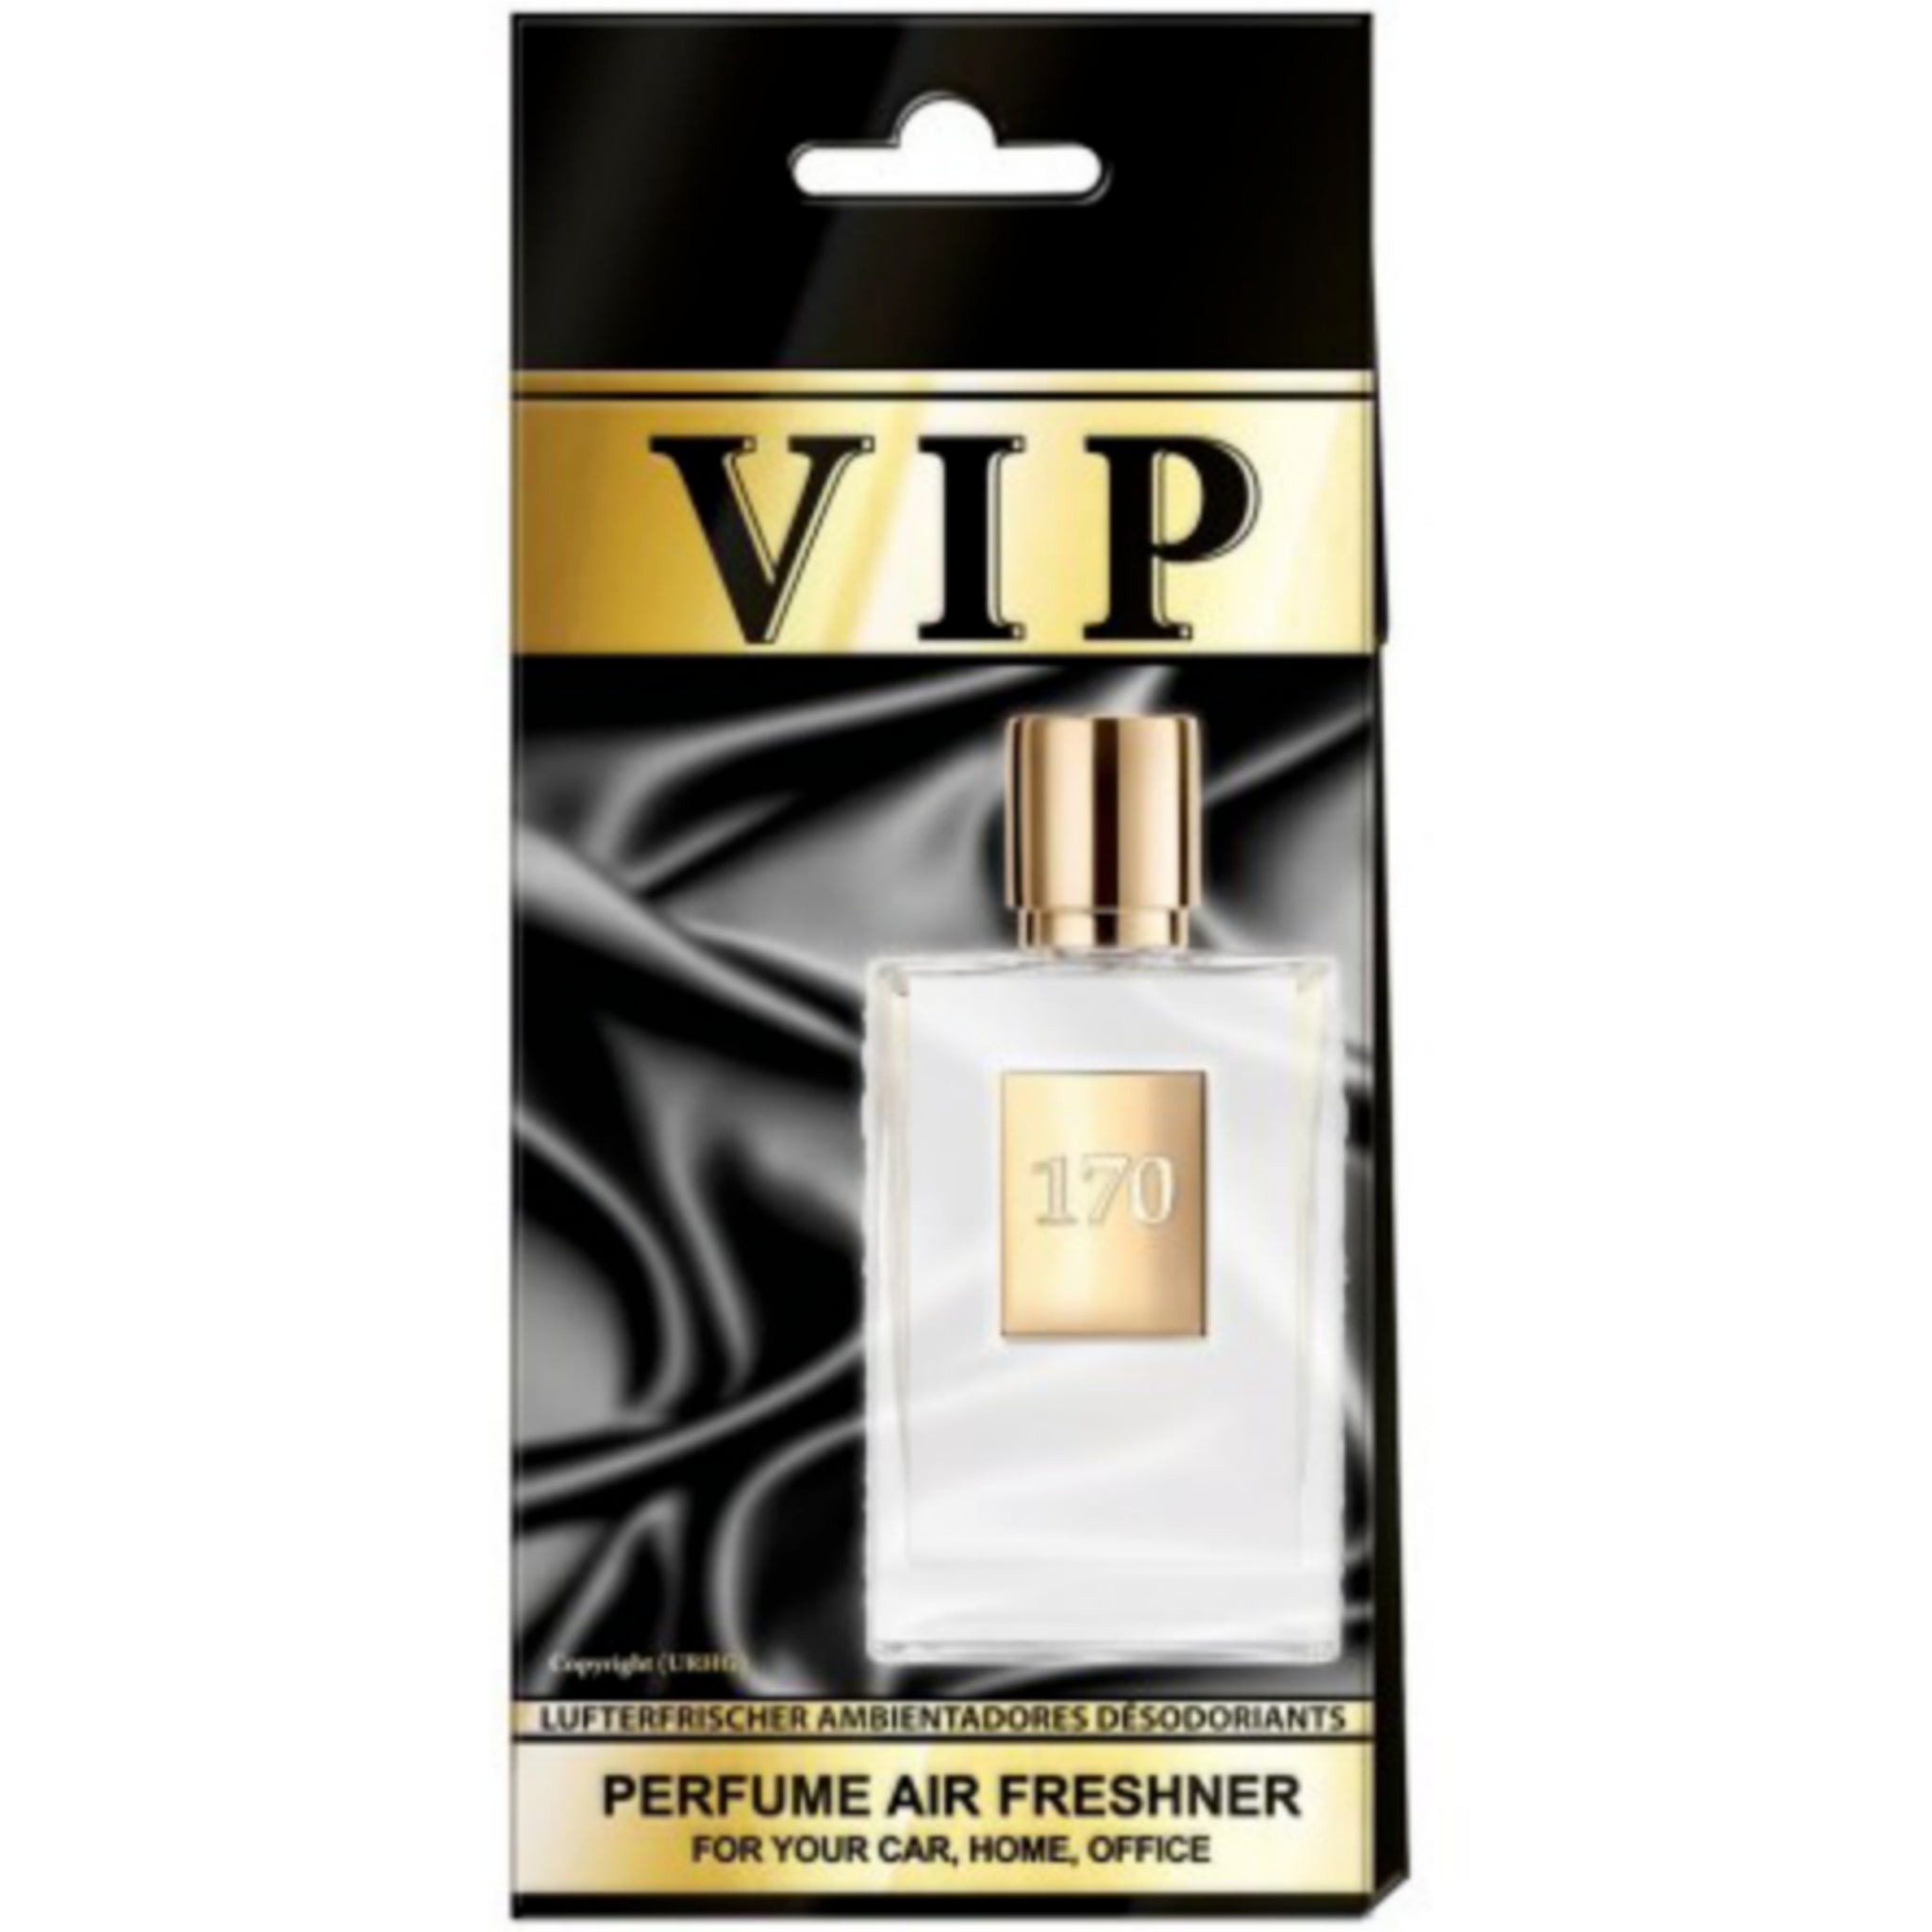 Car fragrance VIP 170